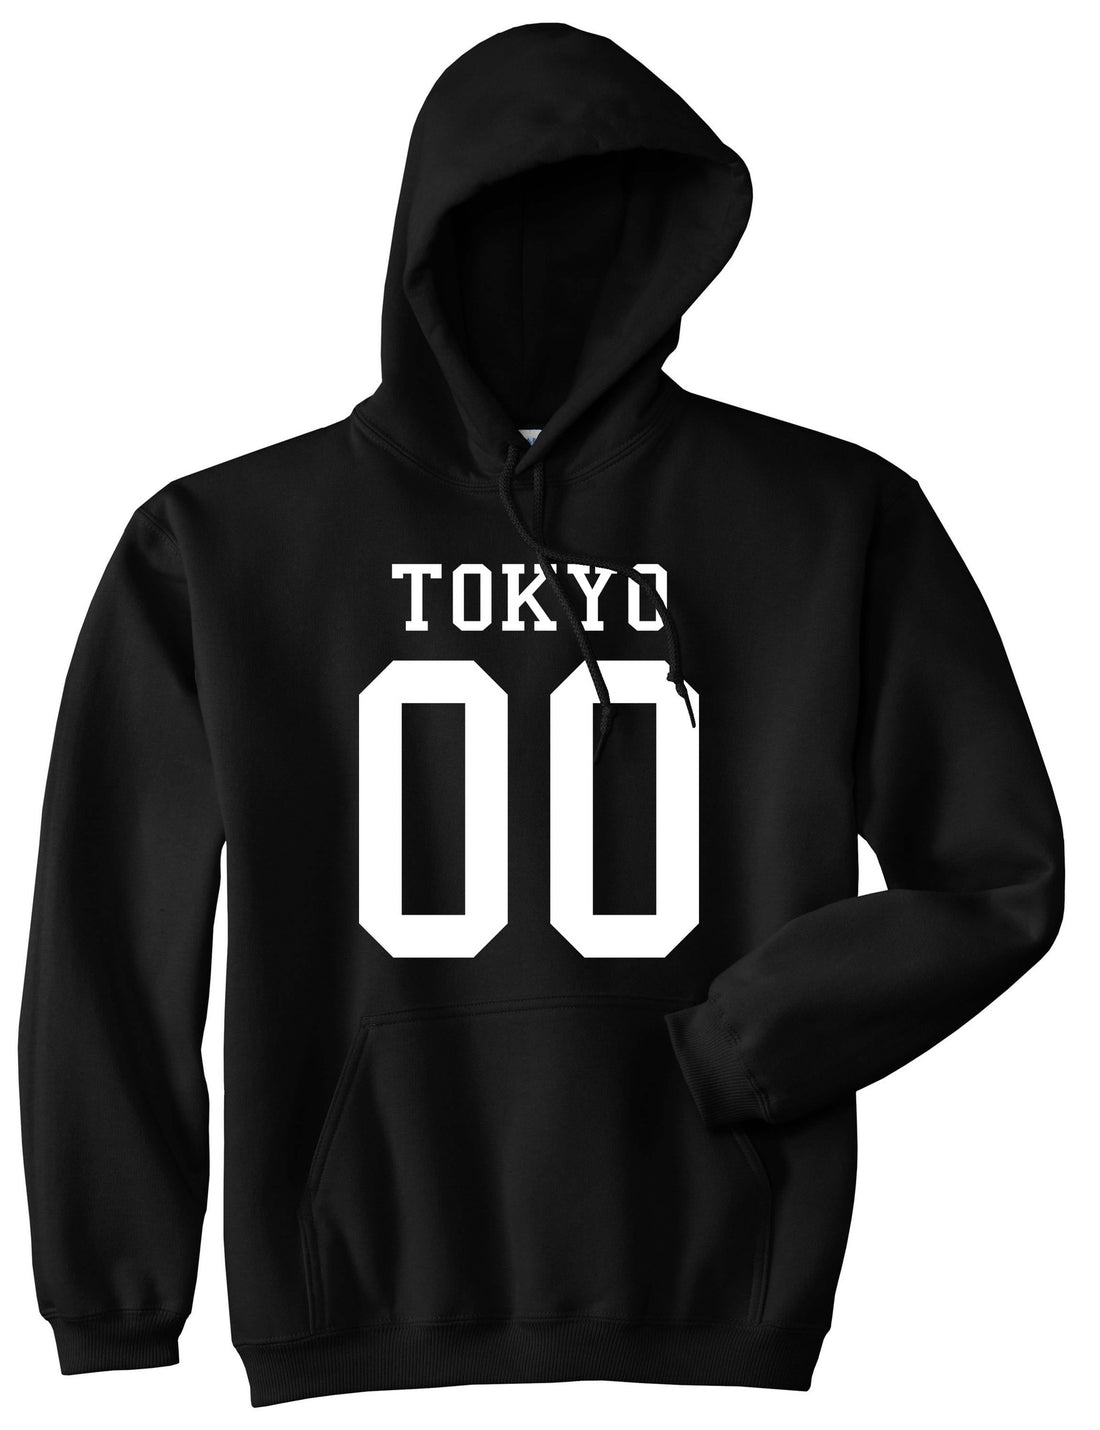 Tokyo Team 00 Jersey Japan Pullover Hoodie in Black By Kings Of NY